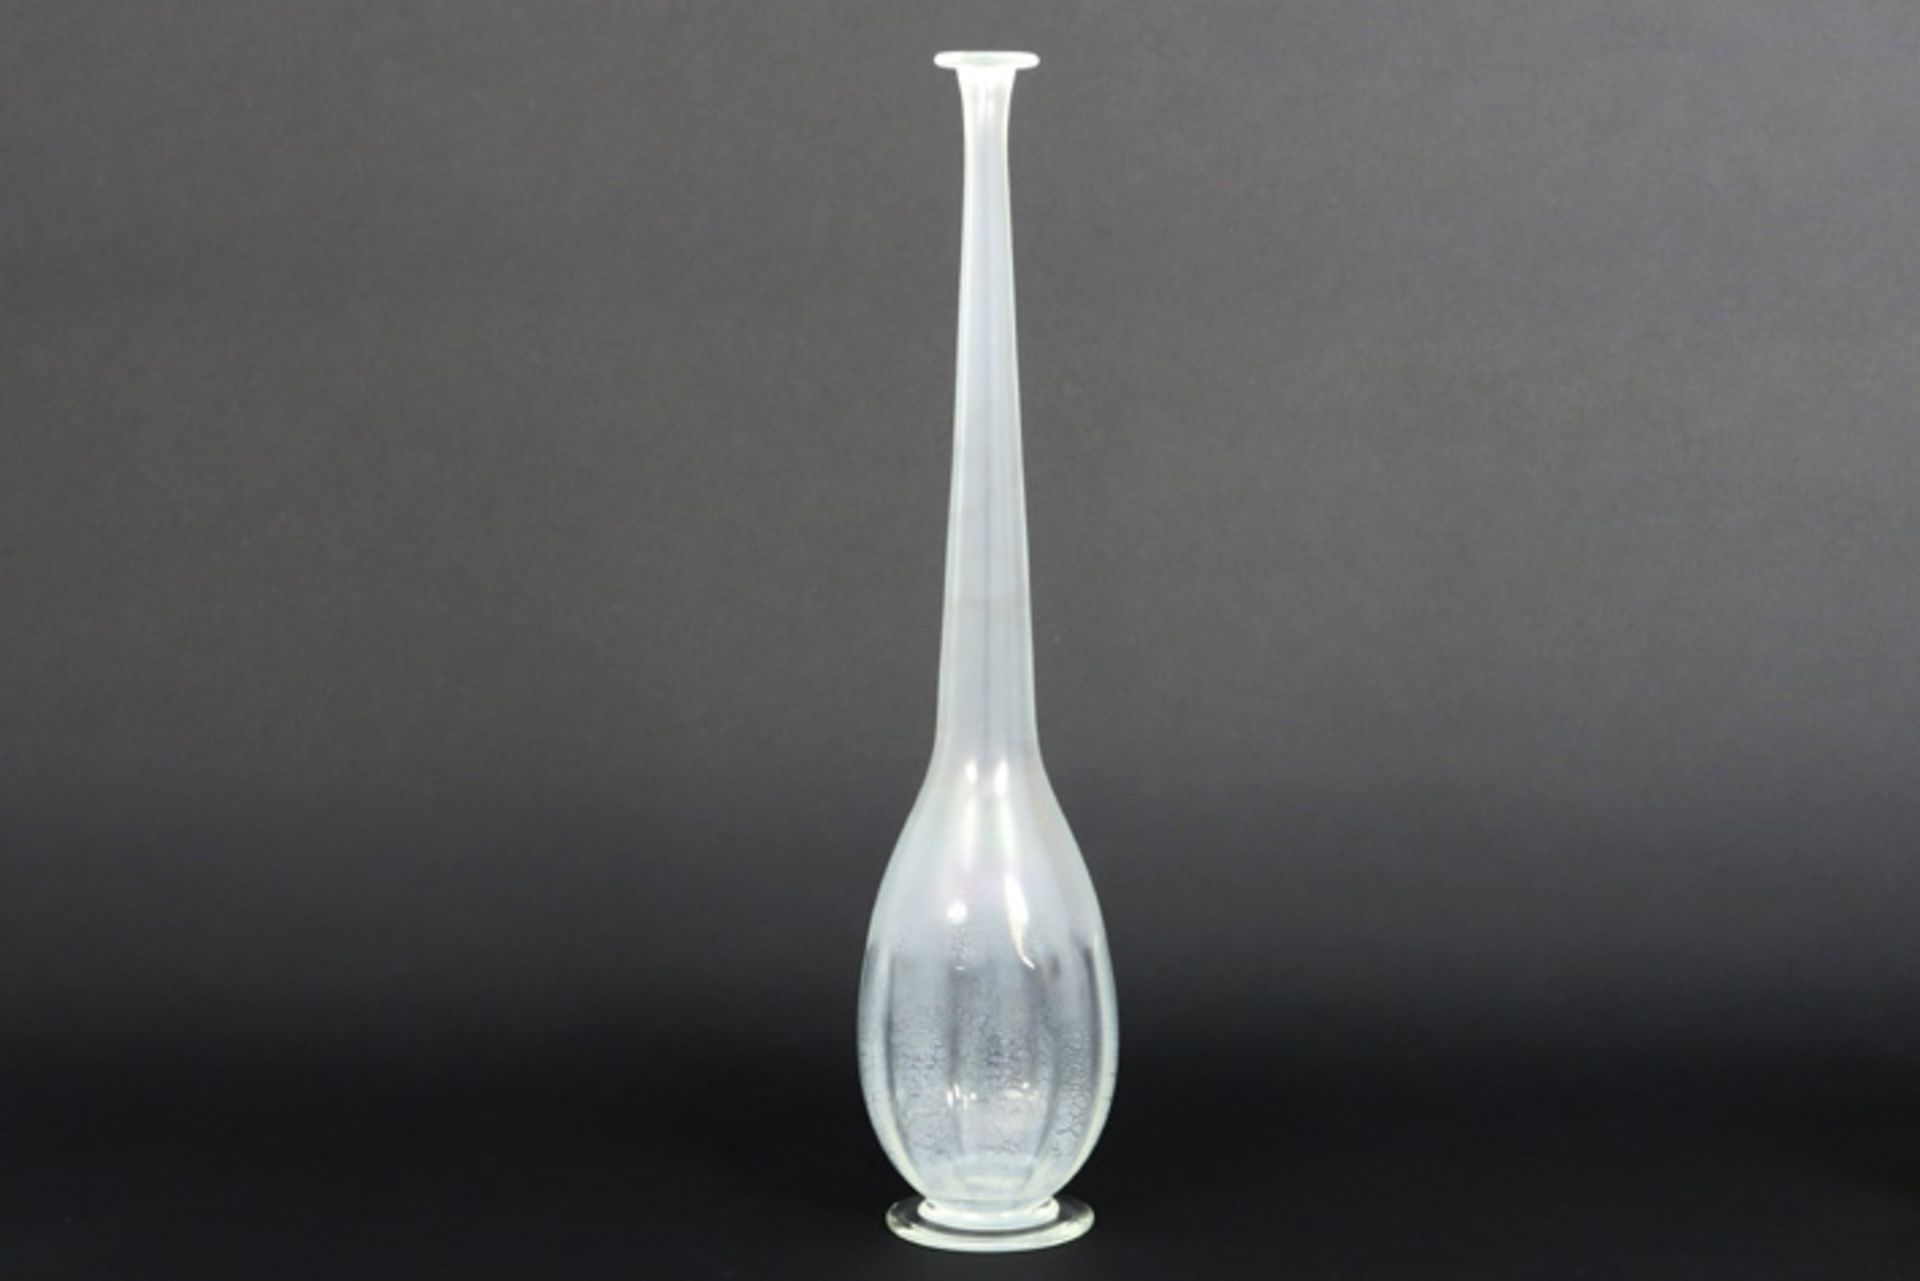 Dutch Andries Dirk Copier "Leerdam Serica n° 7" design bottle vase in glass by Leerdam dd 1928||ANDR